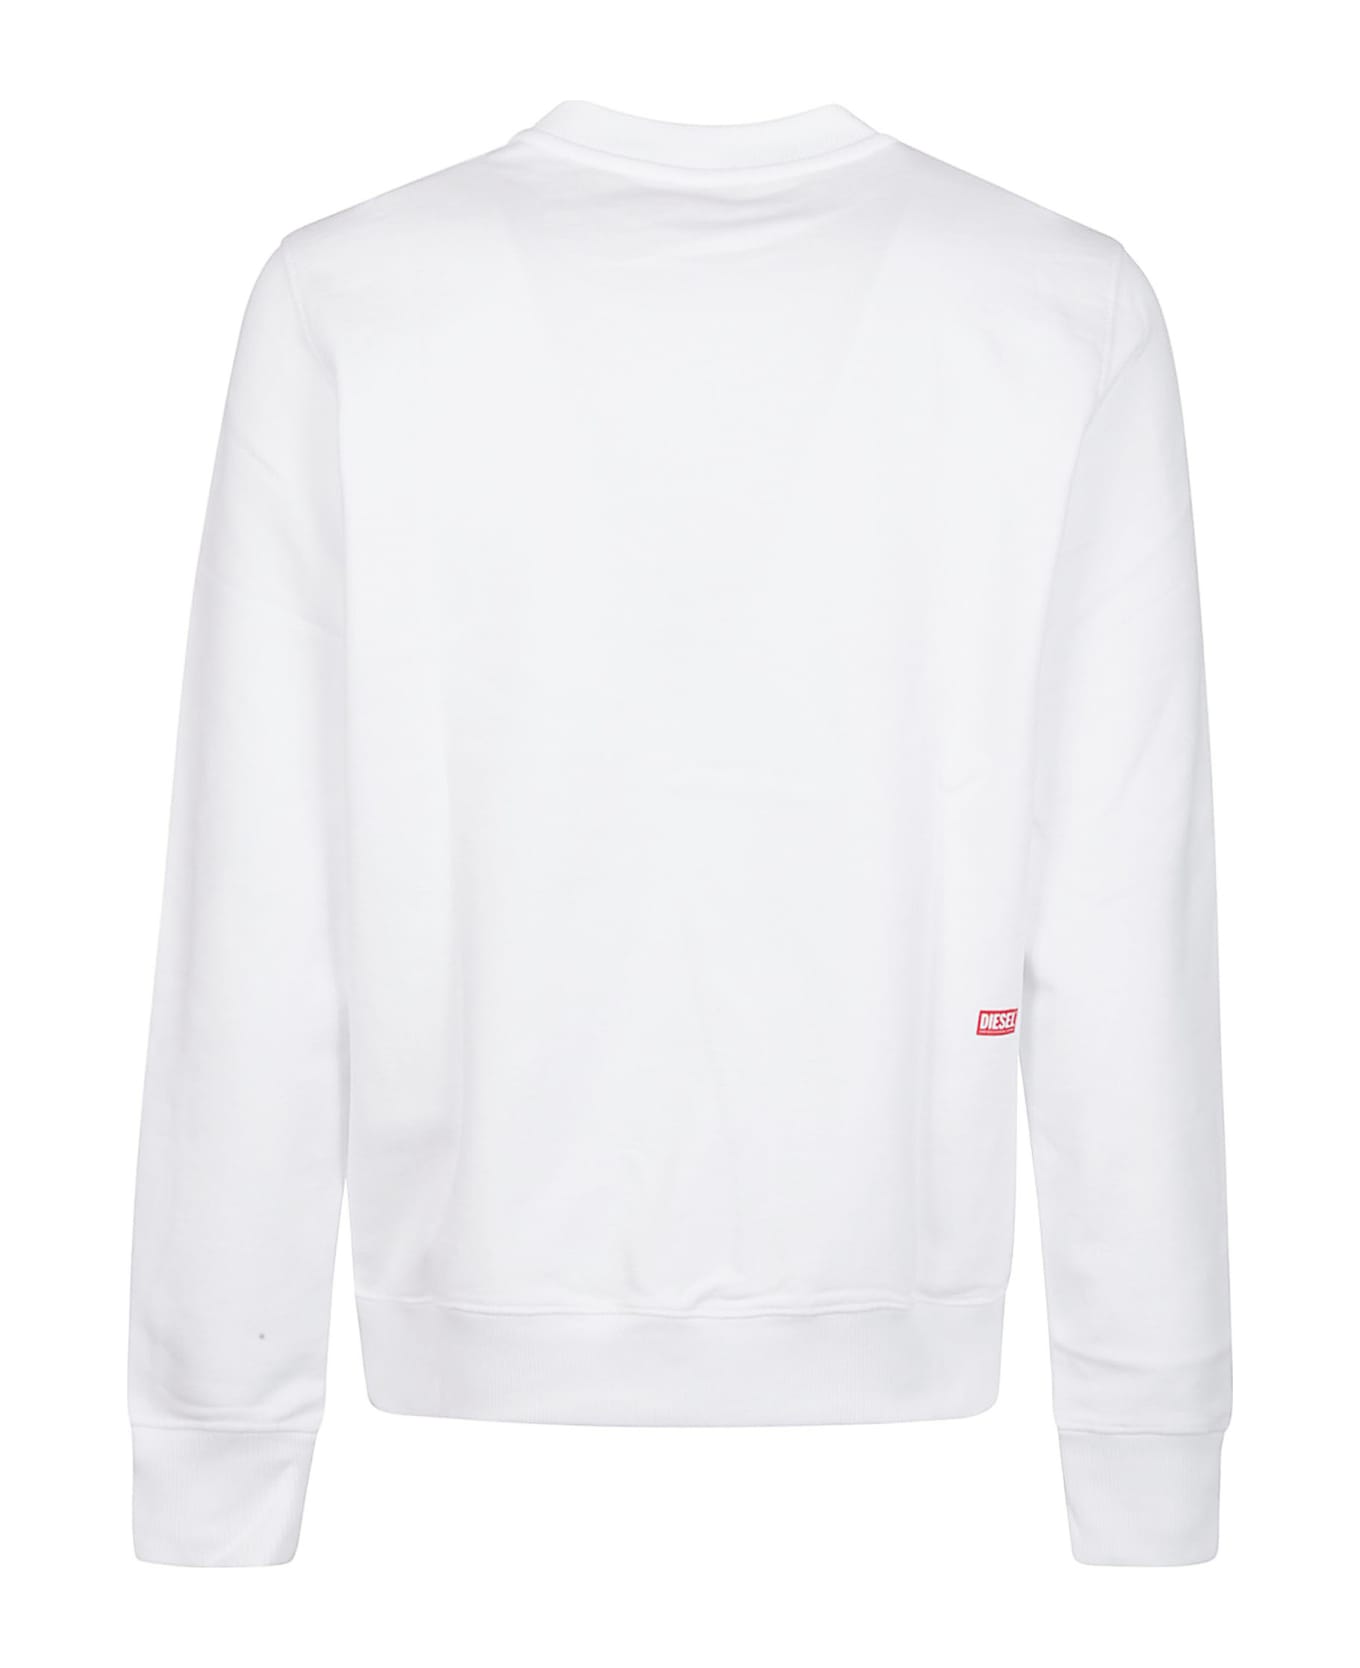 Diesel S-ginn N1 Sweatshirt - White